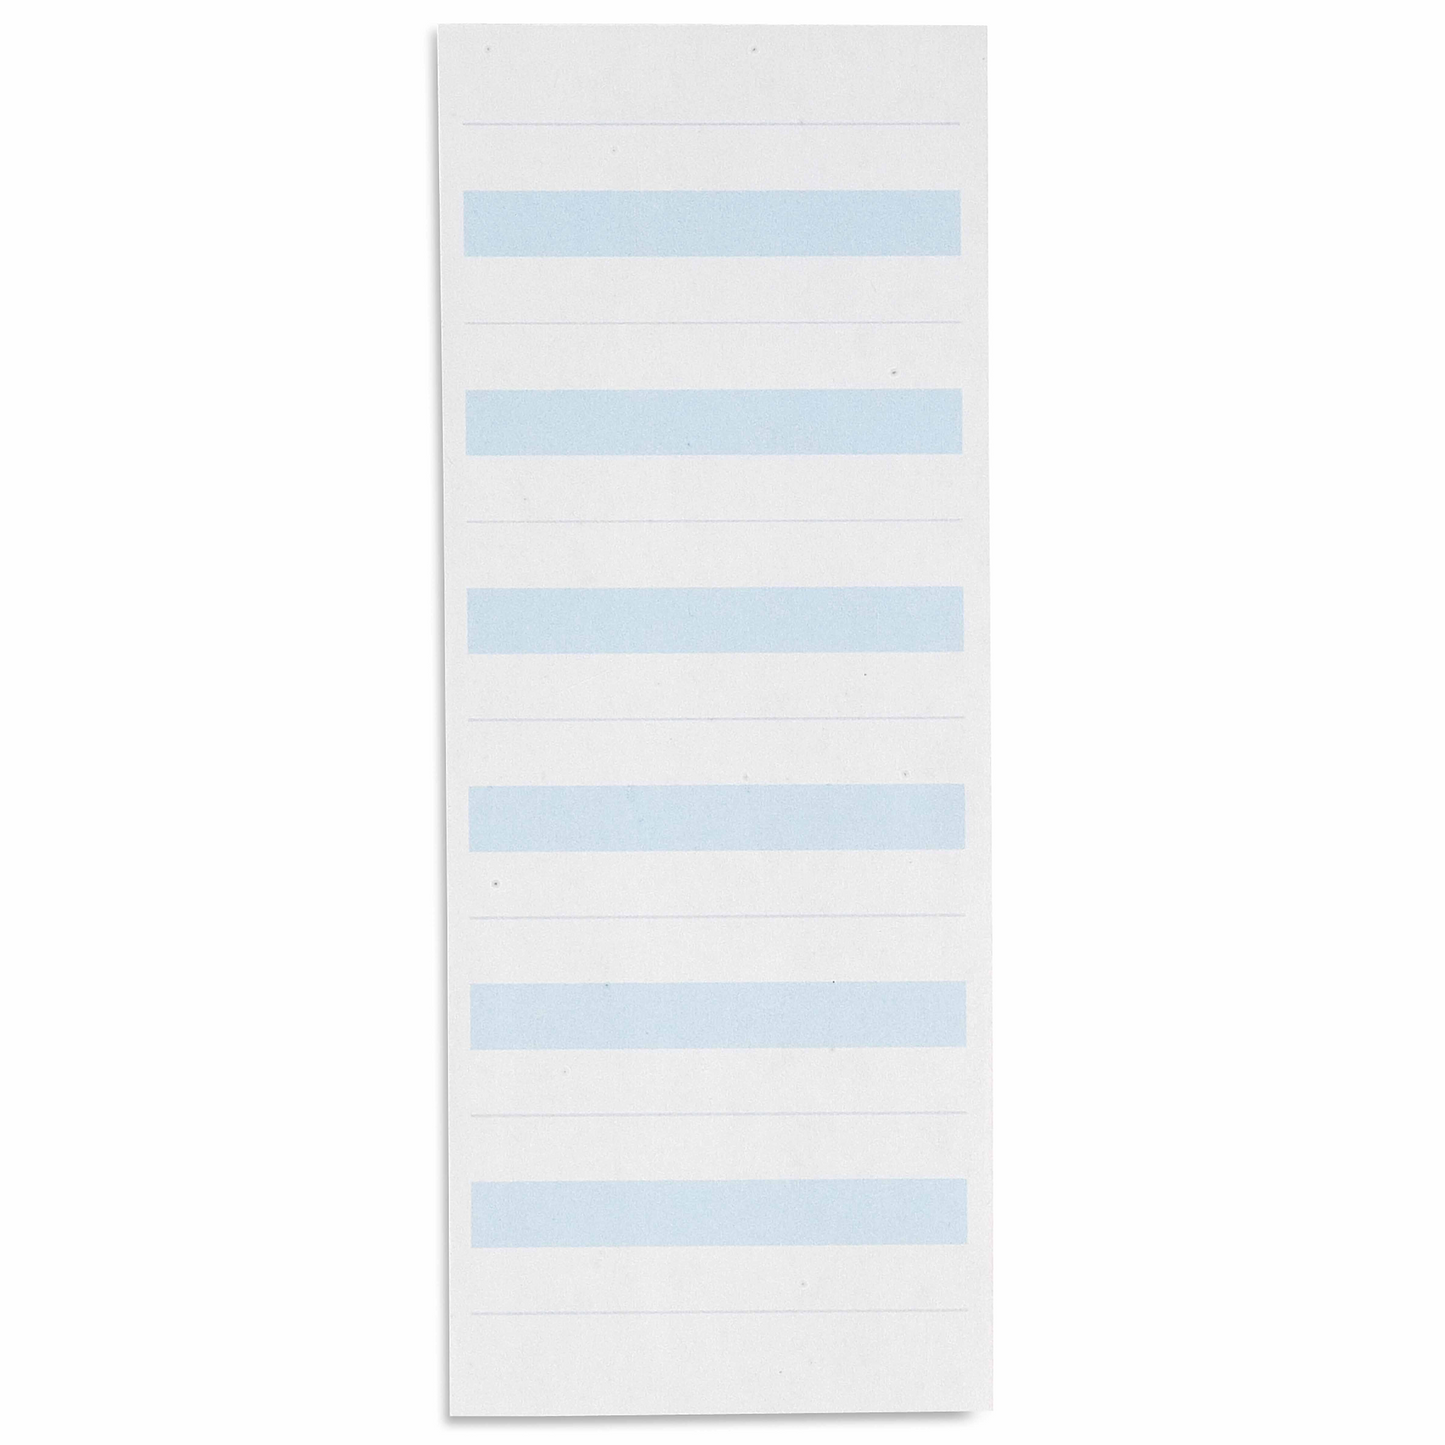 Blue line writing paper x 500 - Nienhuis AMI